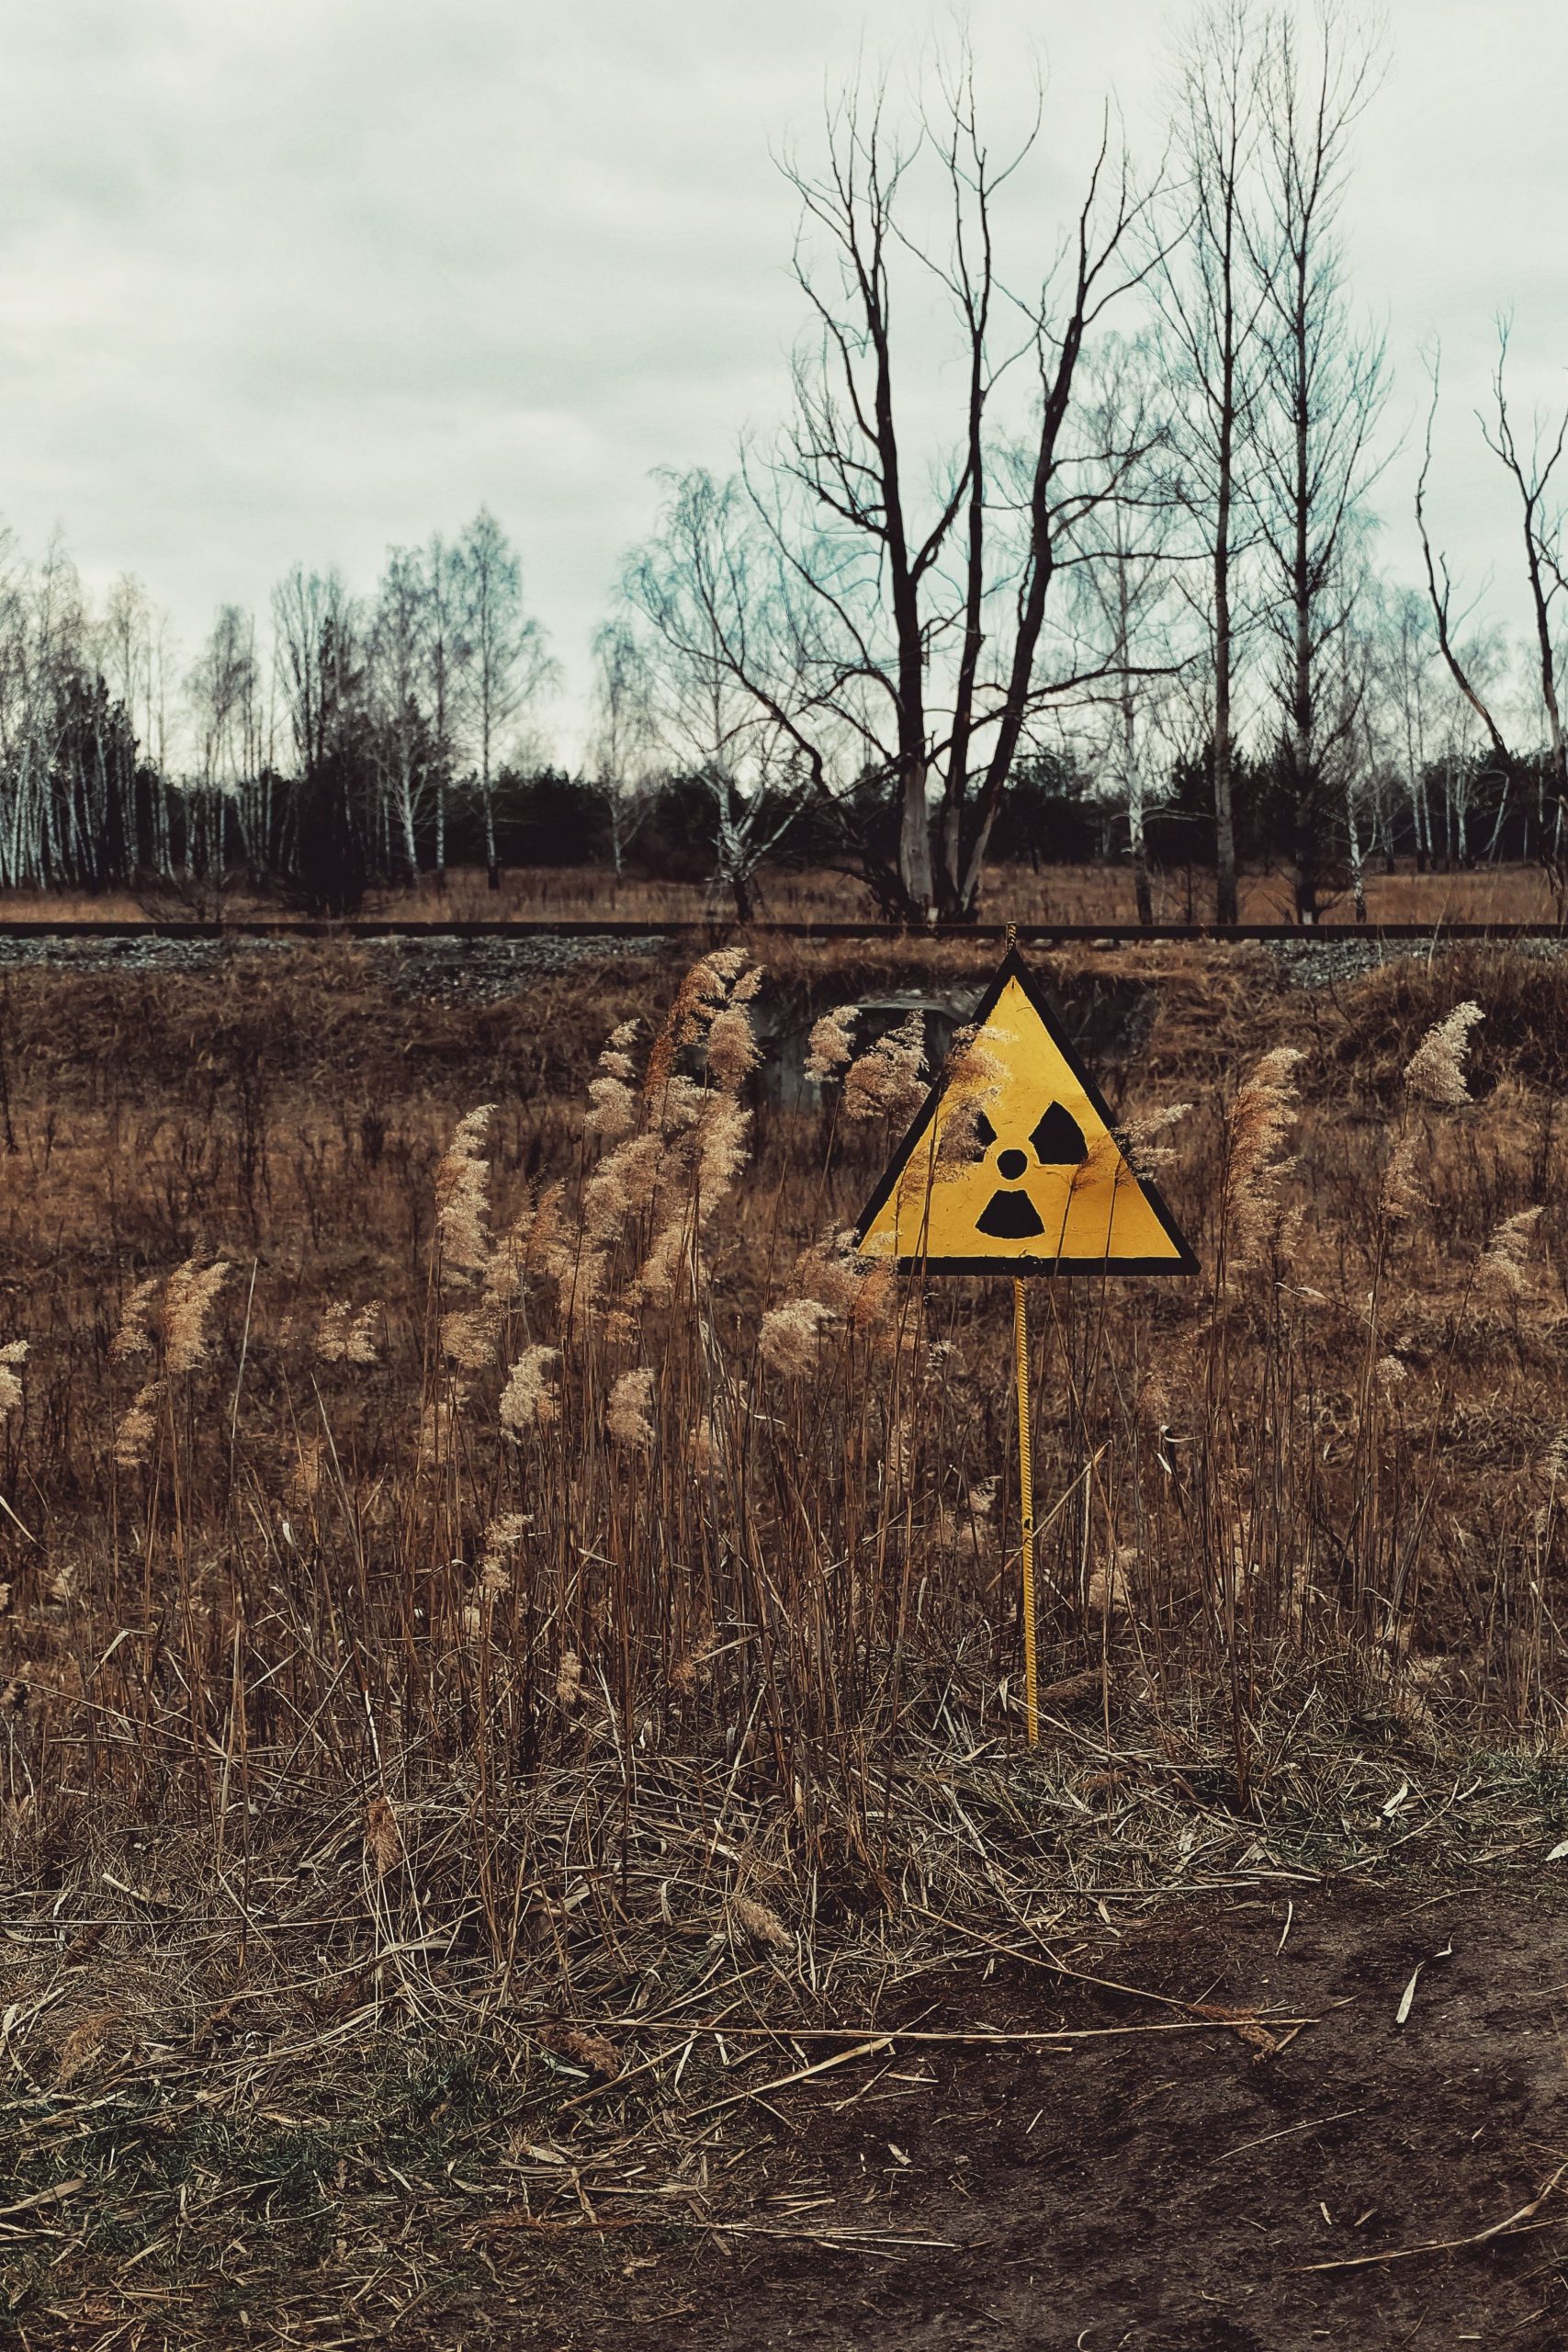 Repairs have begun at Chernobyl amid radiation leak concerns